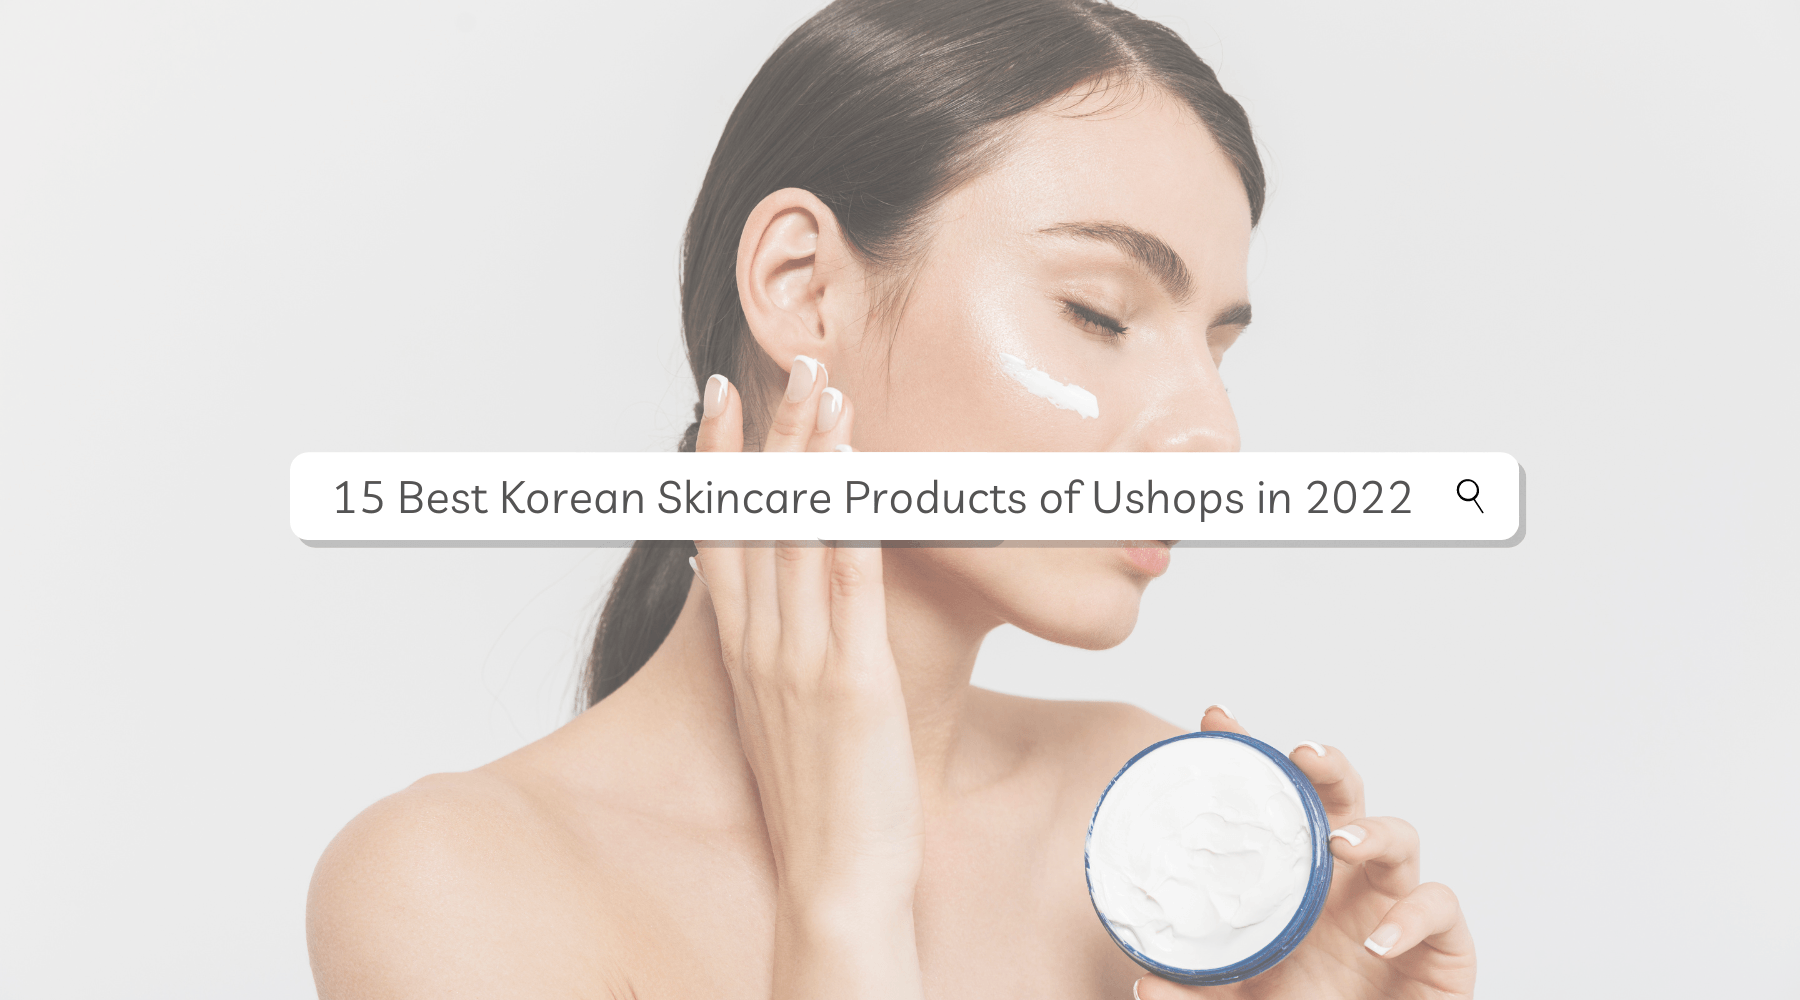 15 Best Korean Skincare Products of Ushops in 2022 - UShops